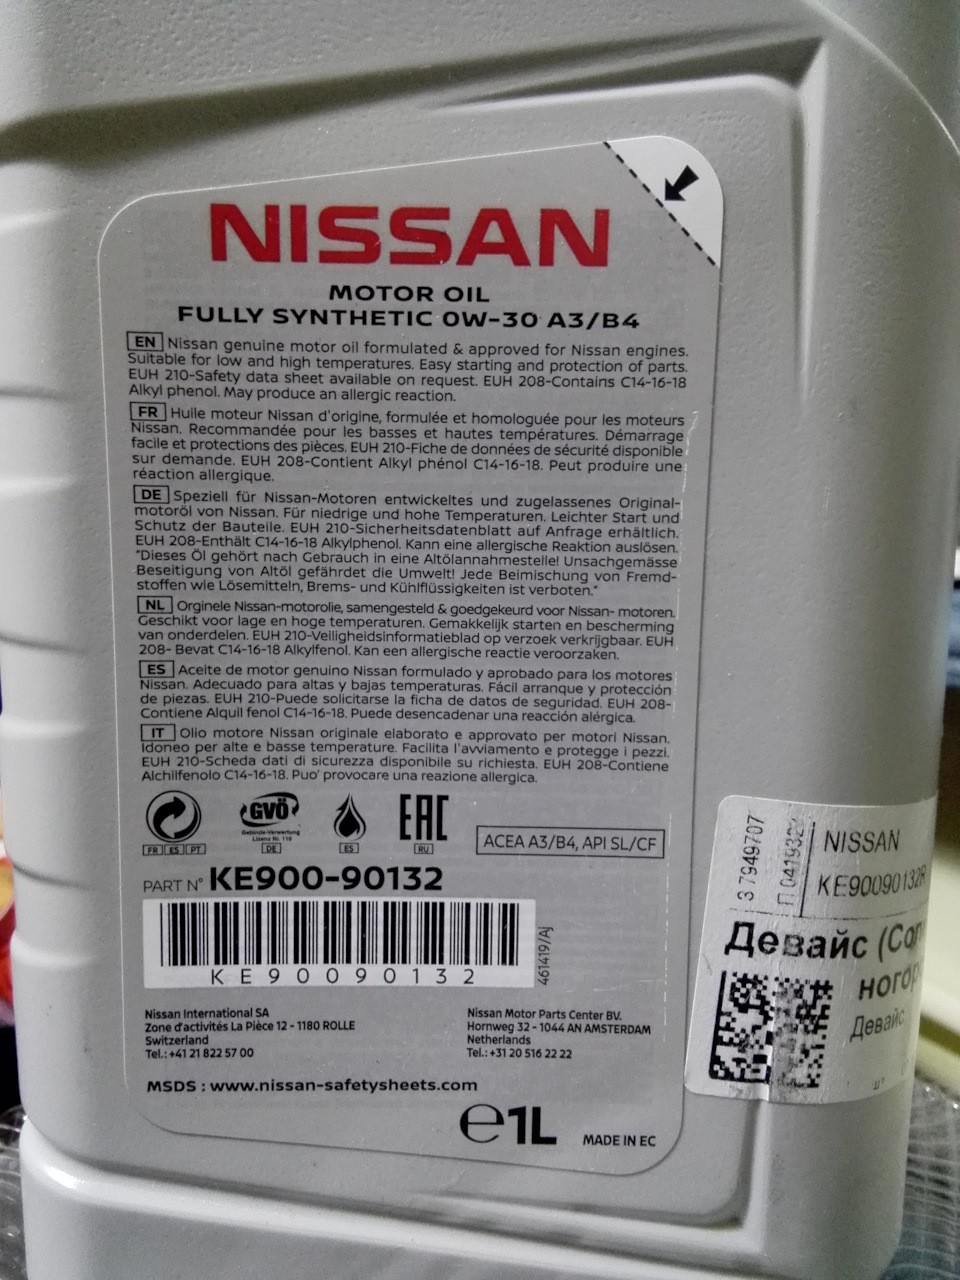 Характеристики масла ниссан. Nissan Motor Oil 0w-30 API-SL. Моторное масло Nissan Genuine Motor Oil 5w-30. Моторное масло Nissan Motor Oil 0w-30 (Art ke900-90132). Моторное масло Ниссан АСЕА с3.